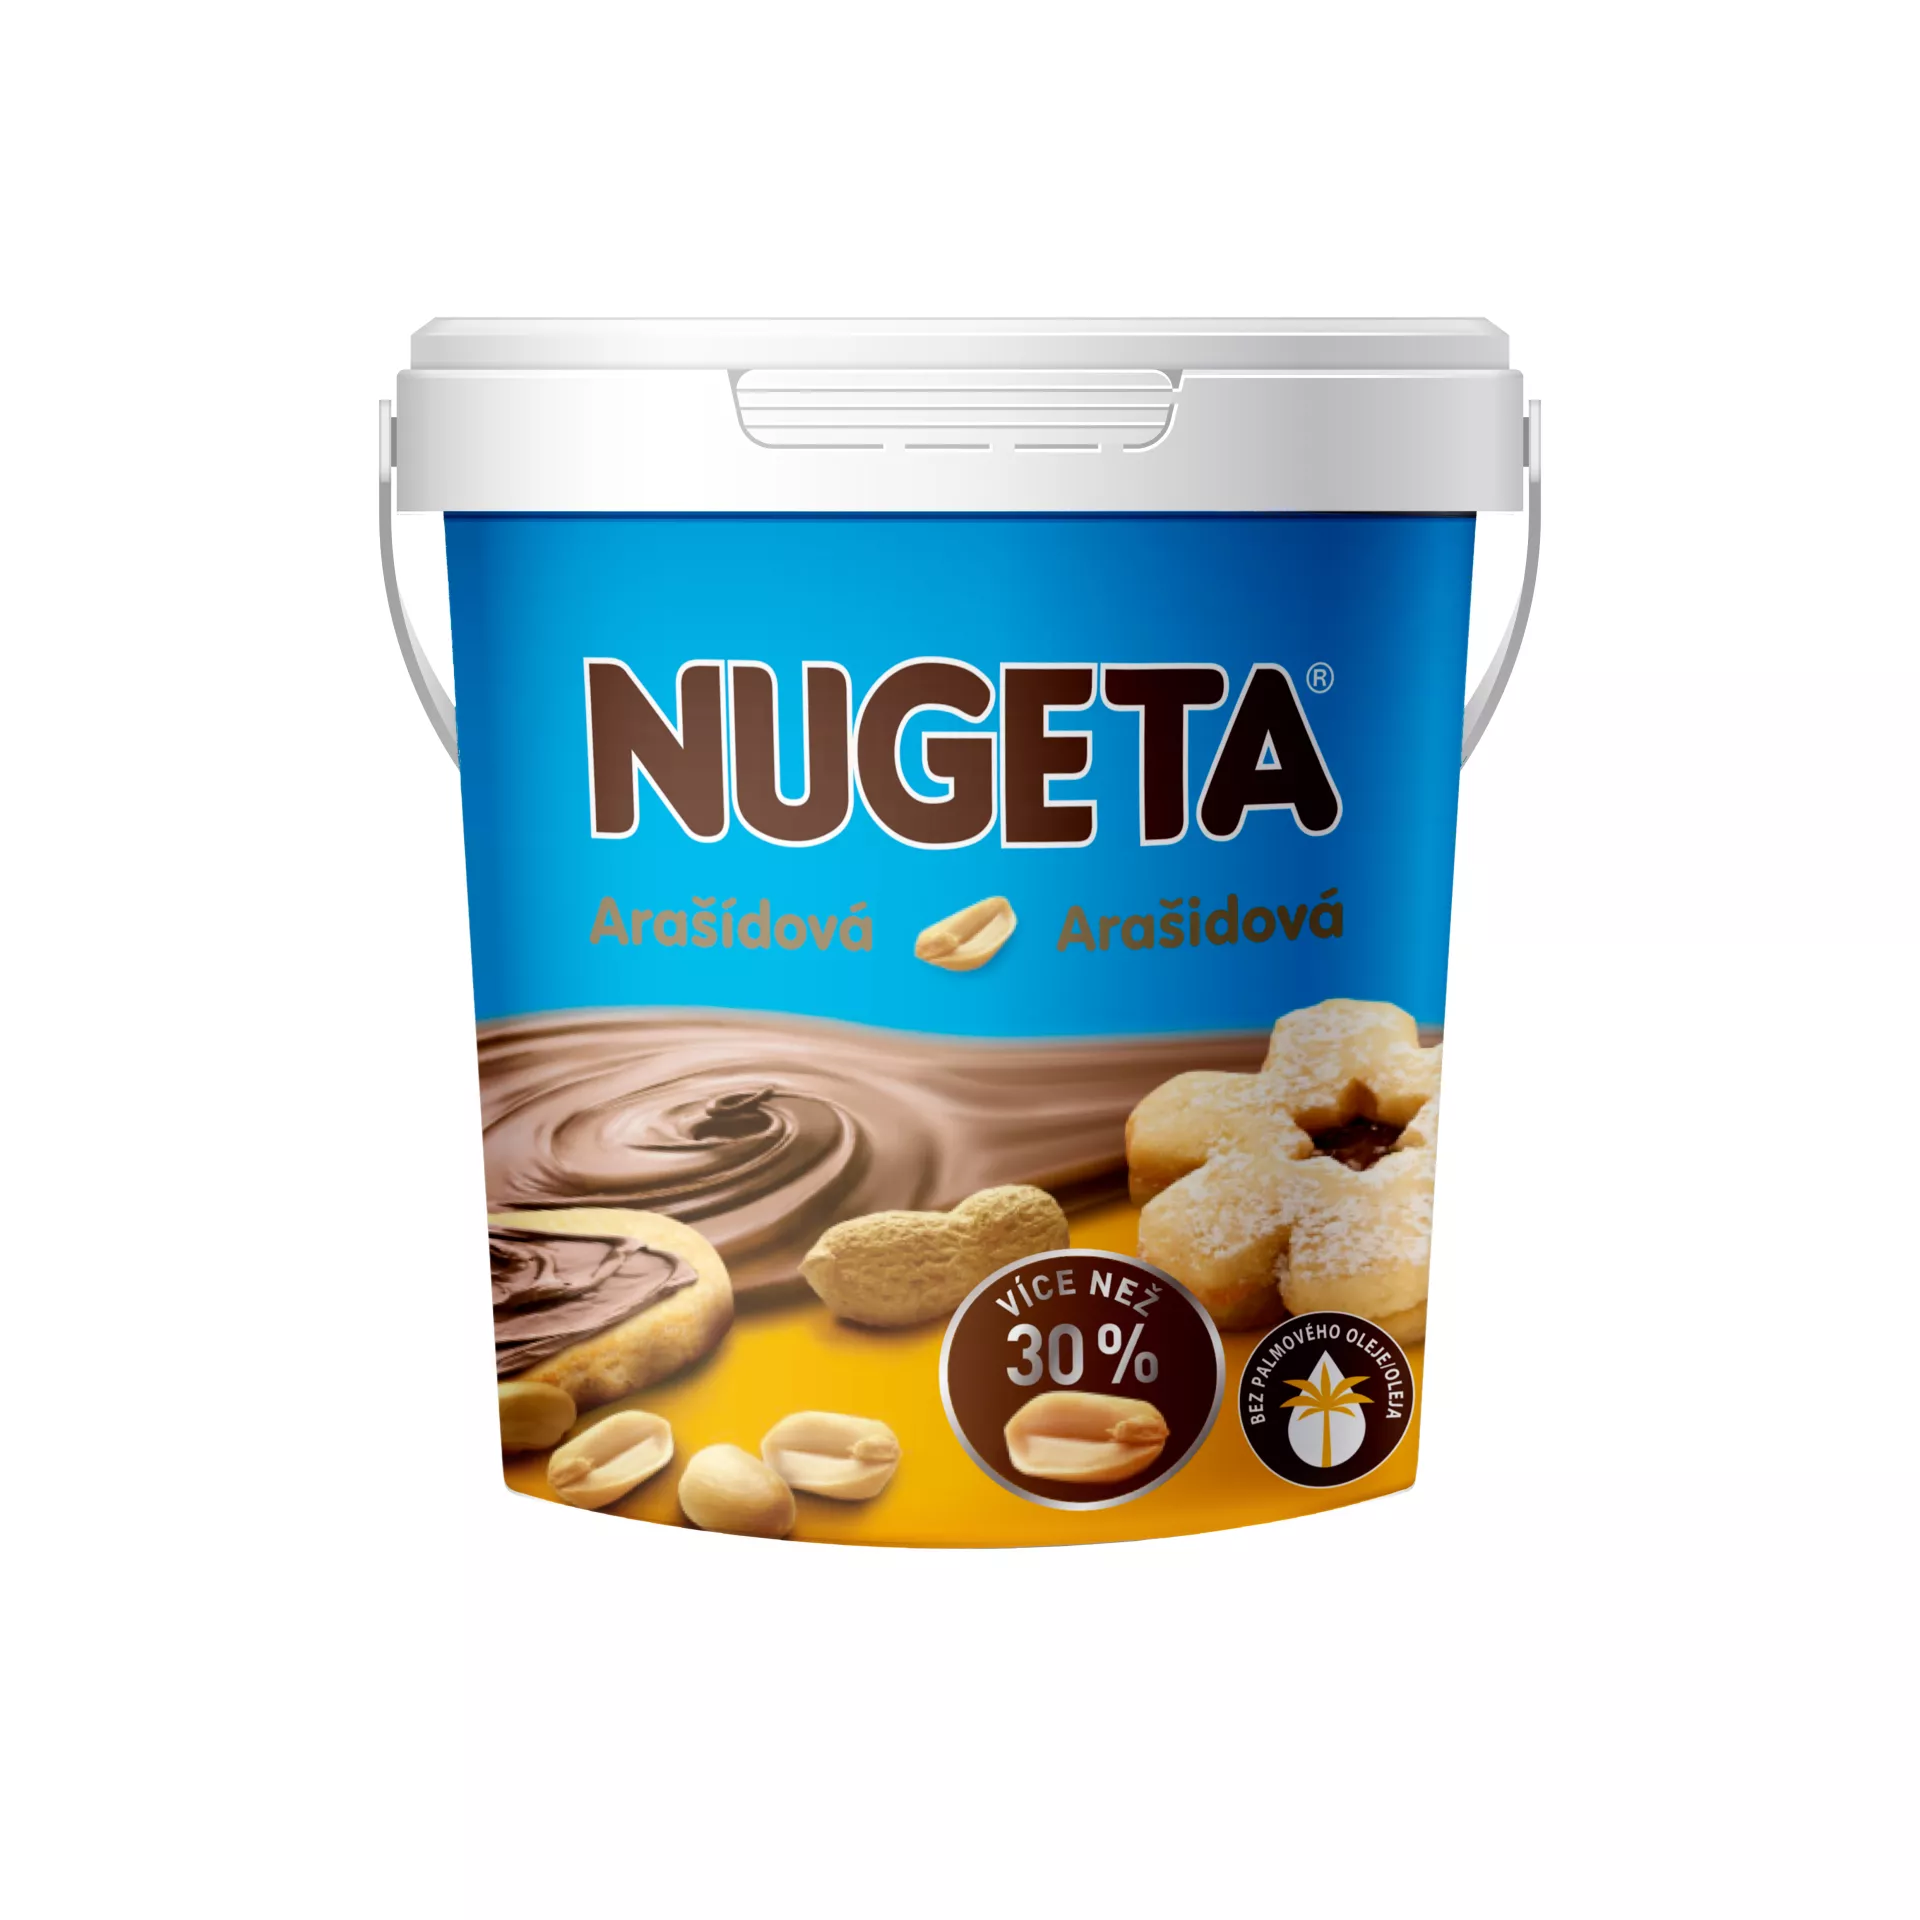 Nugeta peanut spread 1 kg palm oil free